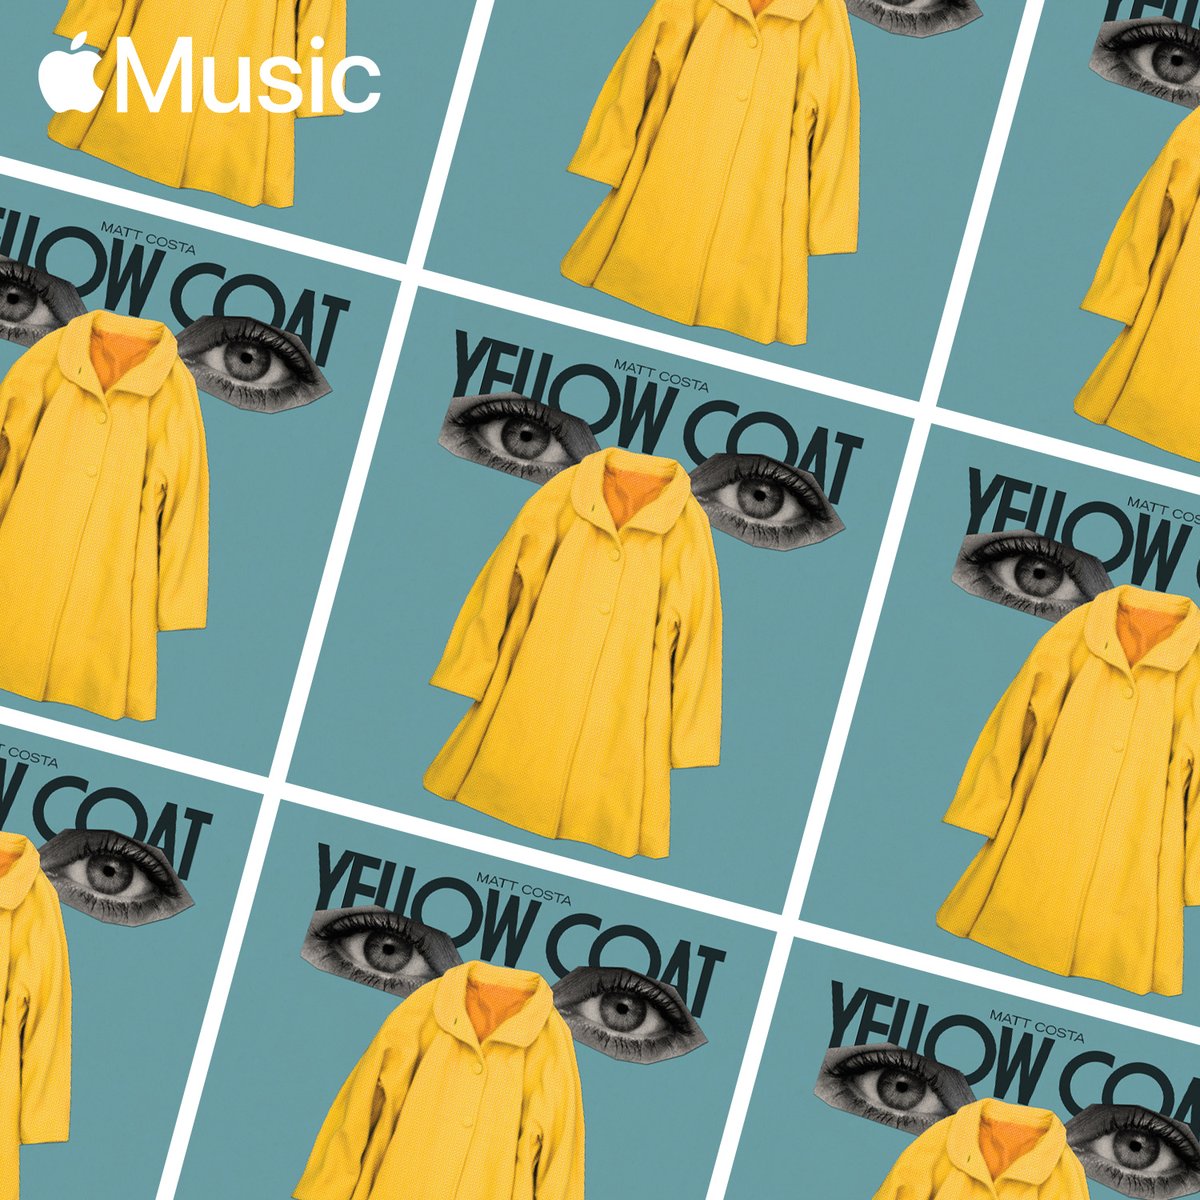 Matt Costa’s Newest Album “Yellow Coat” Review